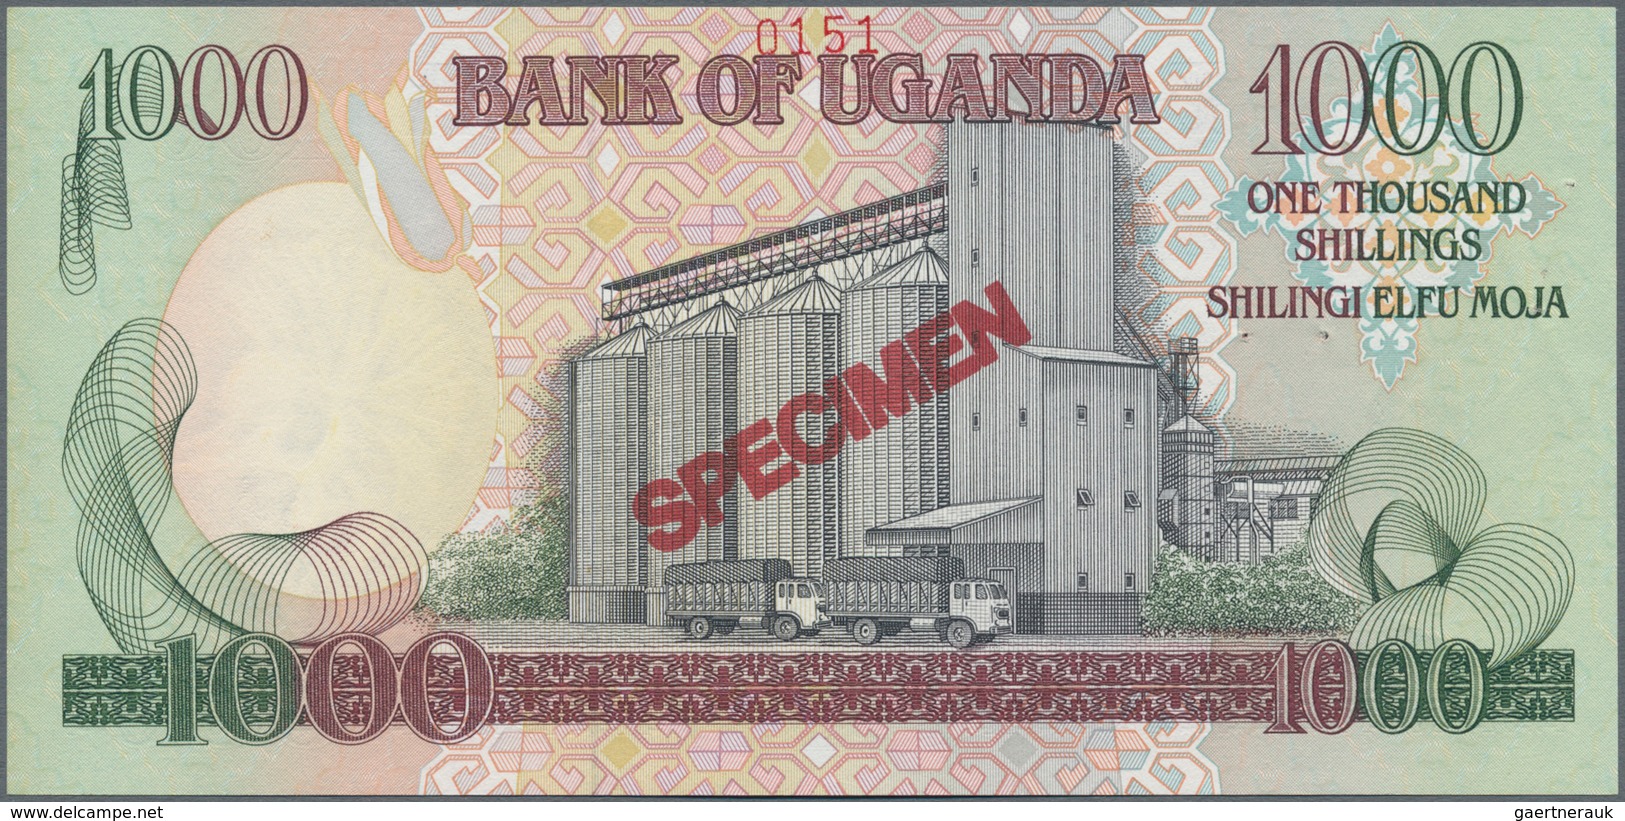 Uganda: Bank of Uganda set with 8 banknotes 5, 10, 20, 50, 100, 200, 500 and 1000 Shillings 1987/199